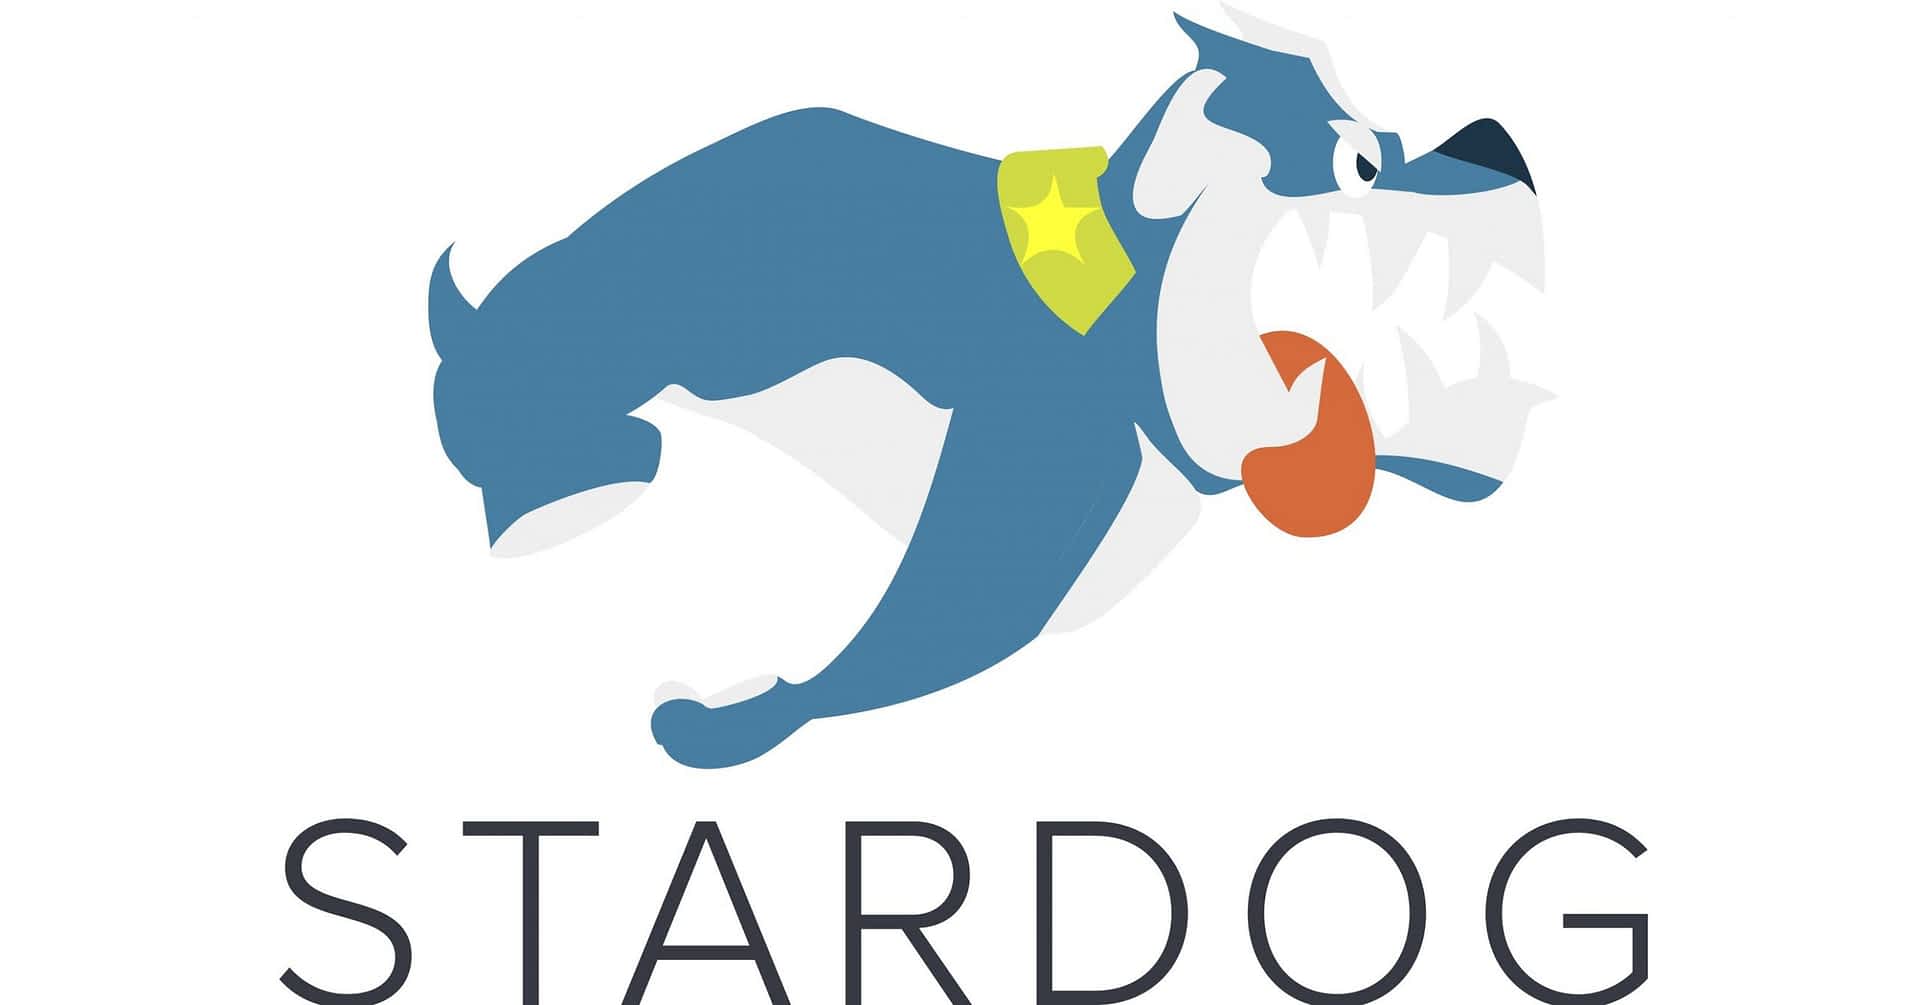 Stardog is the leading Enterprise Knowledge Graph platform